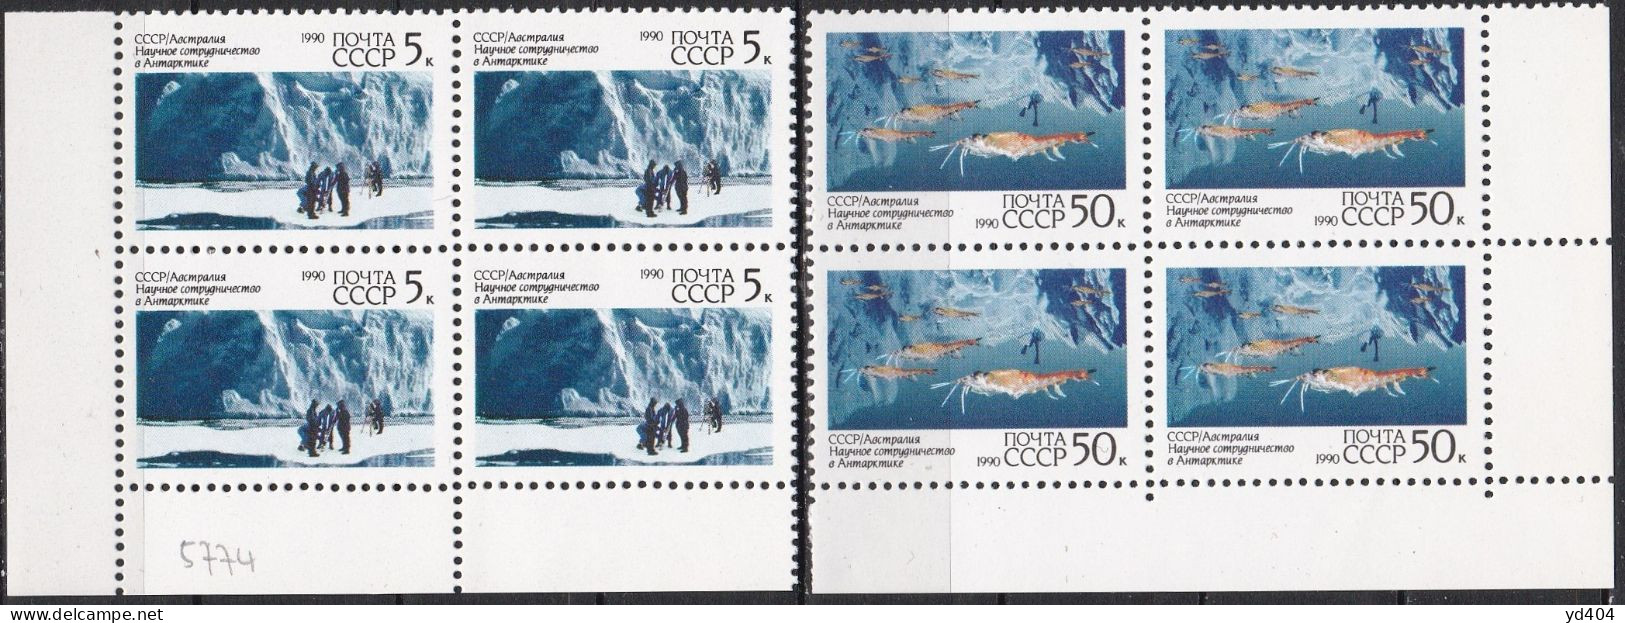 RU160– URSS - USSR – 1990 – SOVIET-AUSTRALIAN CO-OPERATION – YT # 5758/9 MNH 9,20 € - Unused Stamps